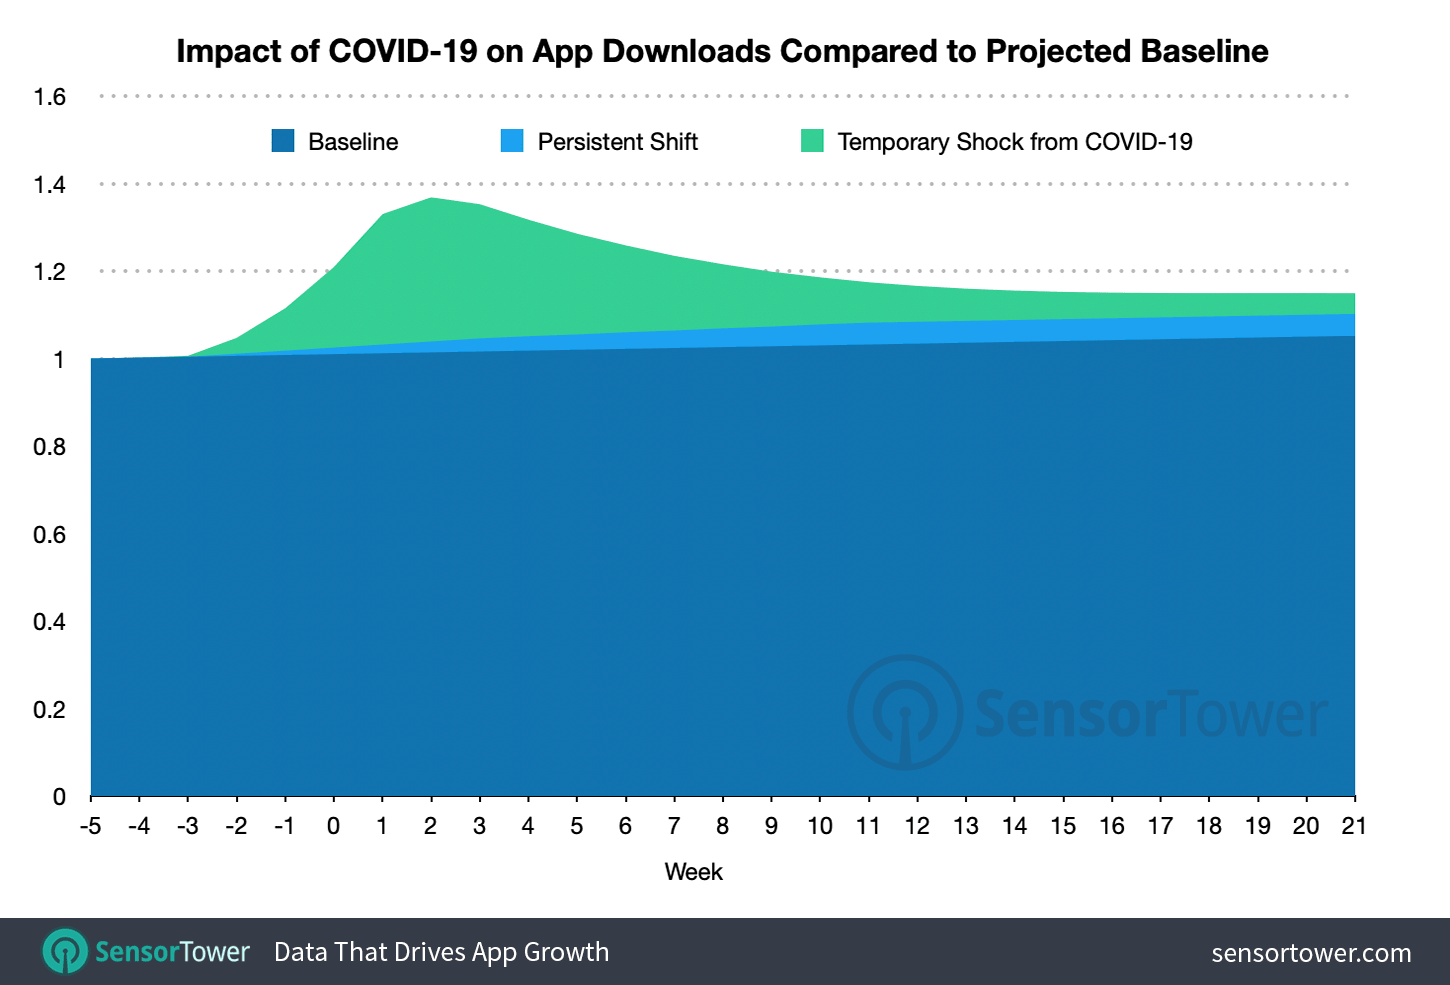 COVID Baseline Downloads 2020